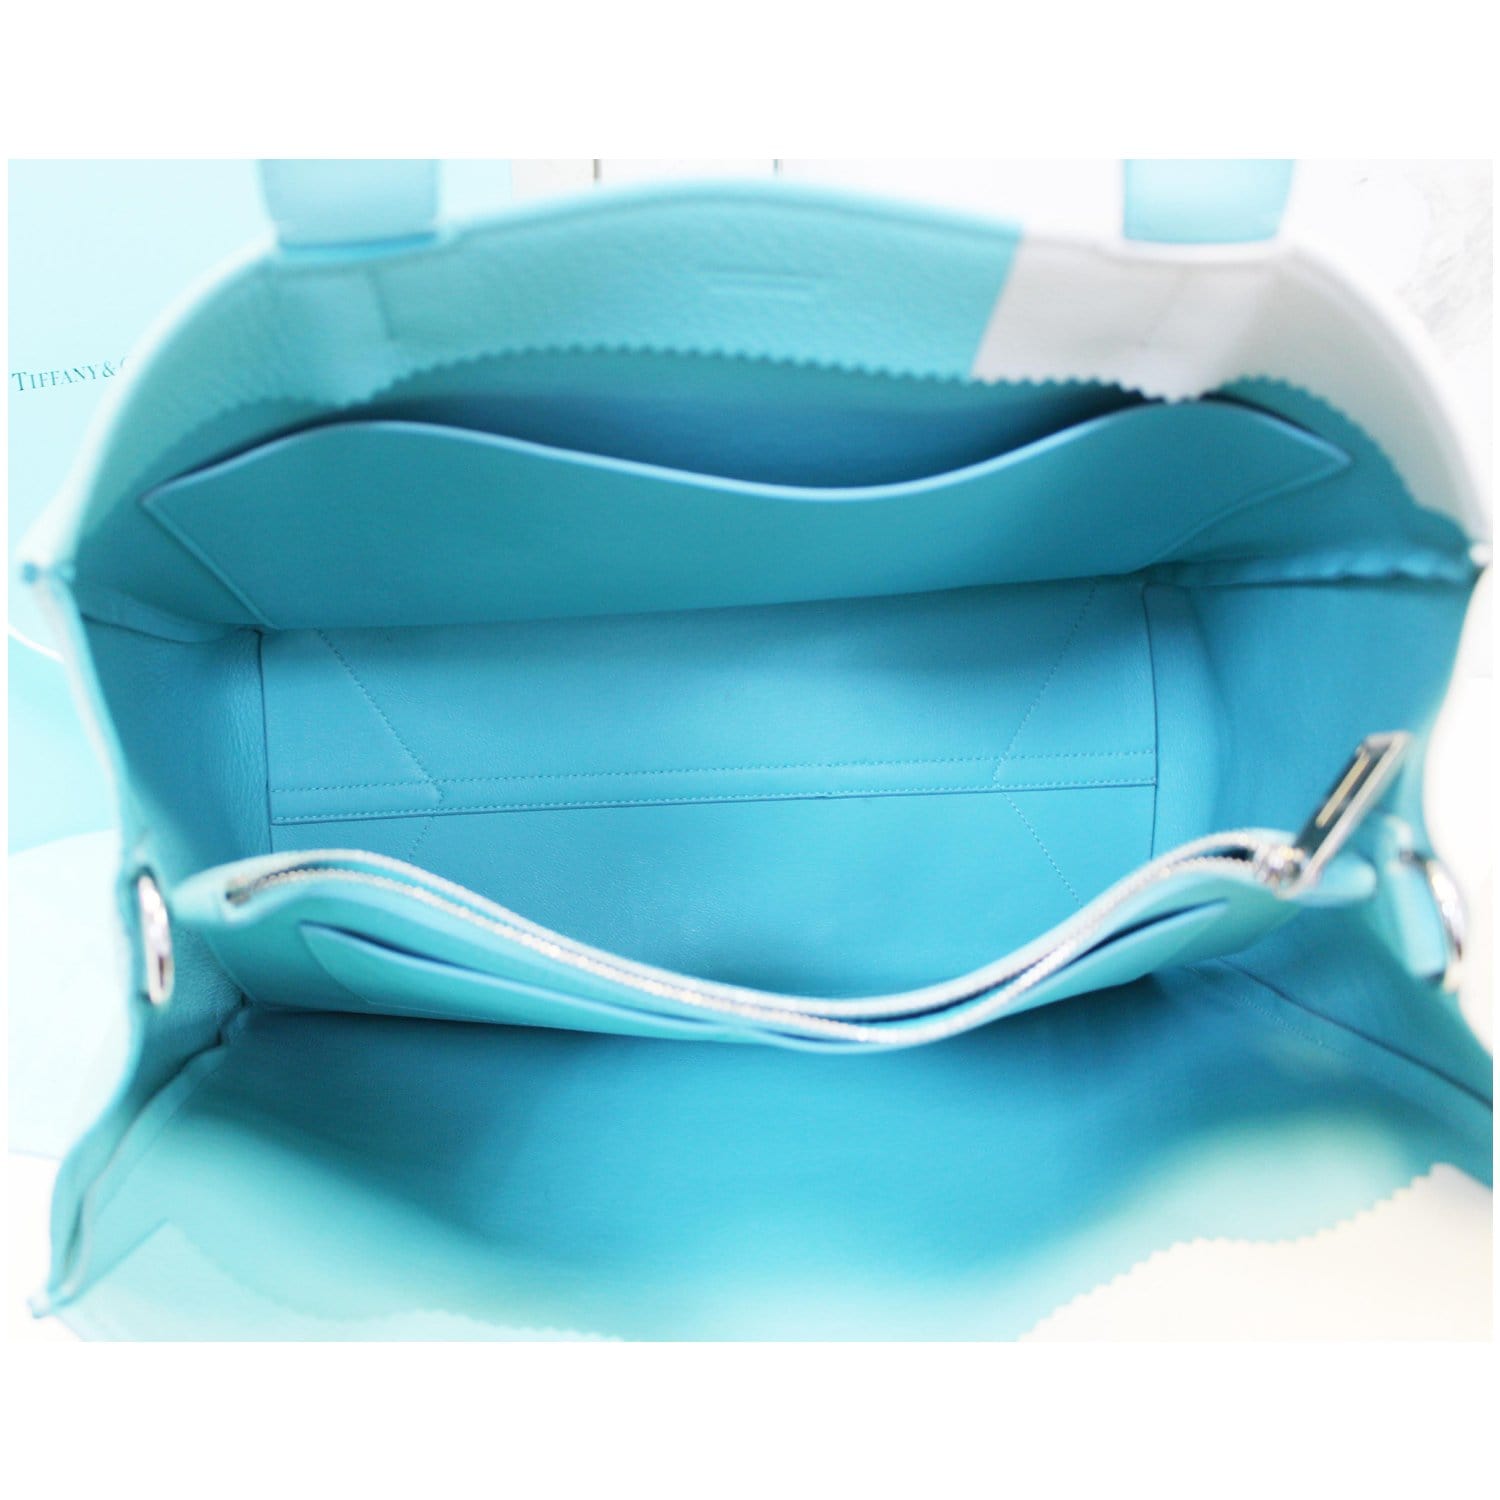 Tiffany Blue Handbags